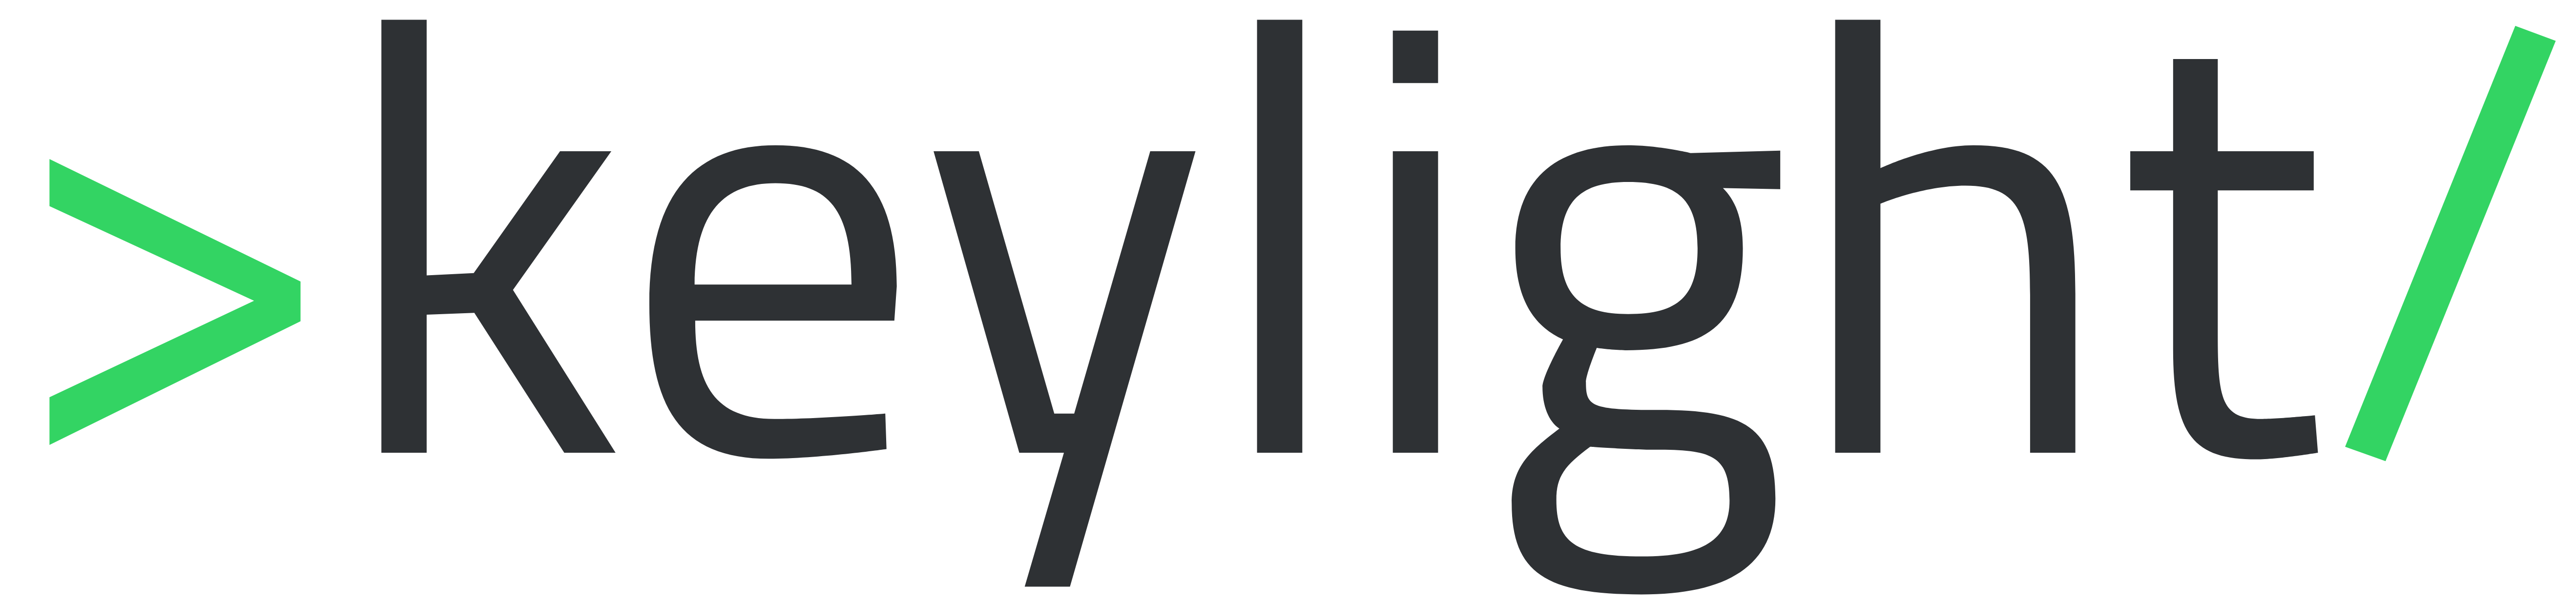 keylight-logo